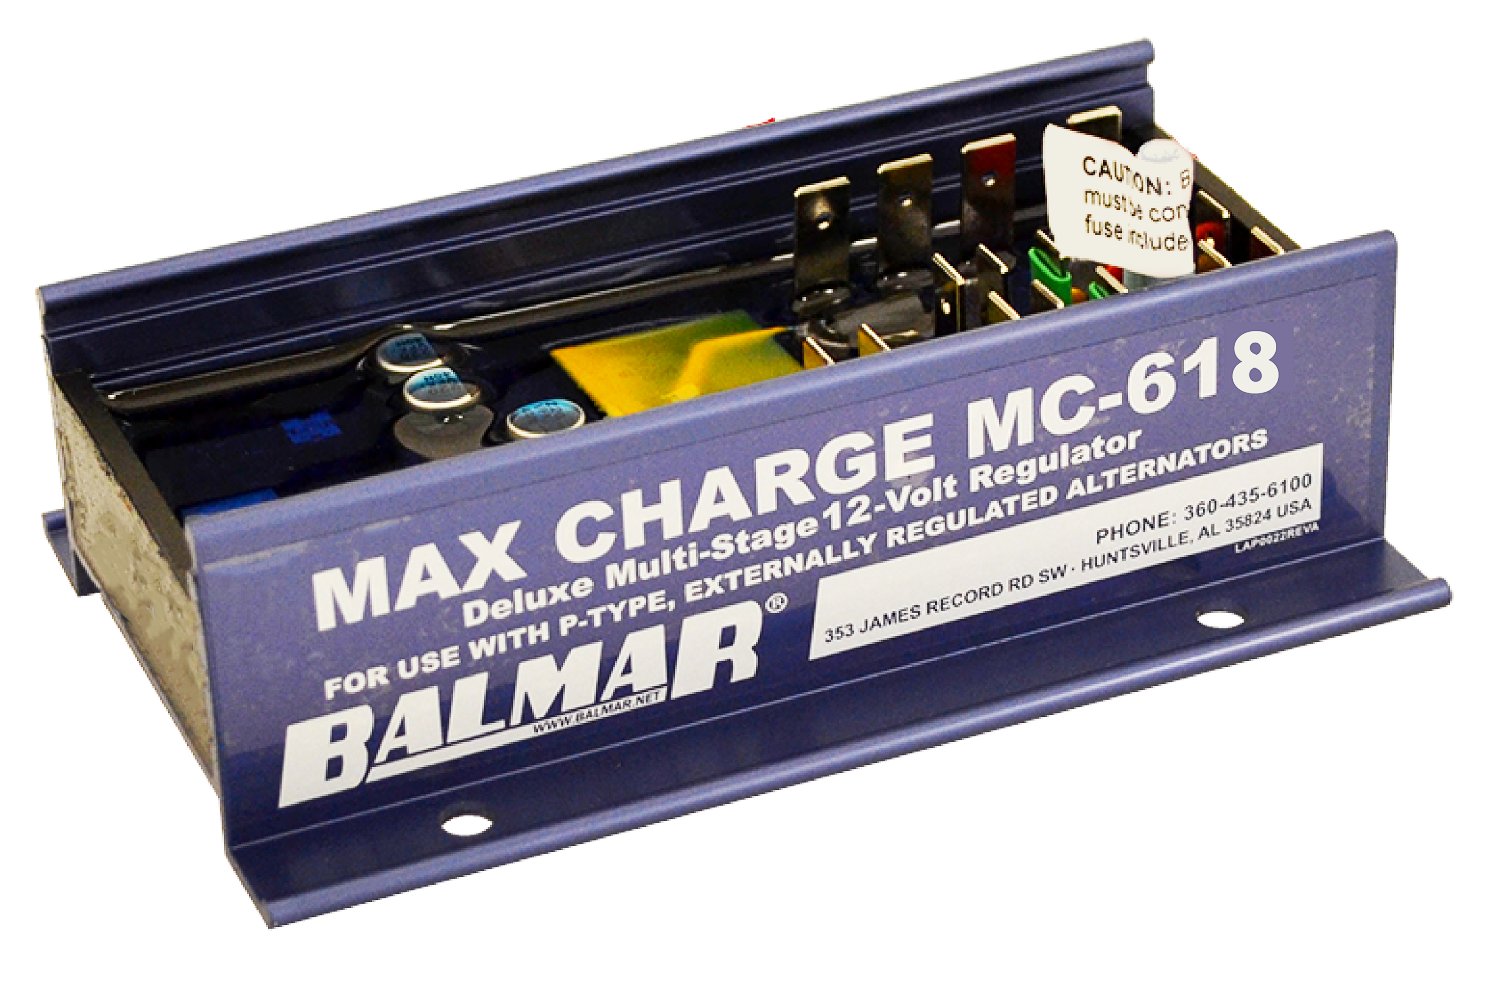 Does the Balmar MC-618 Voltage Regulator use the same harness as mc614?